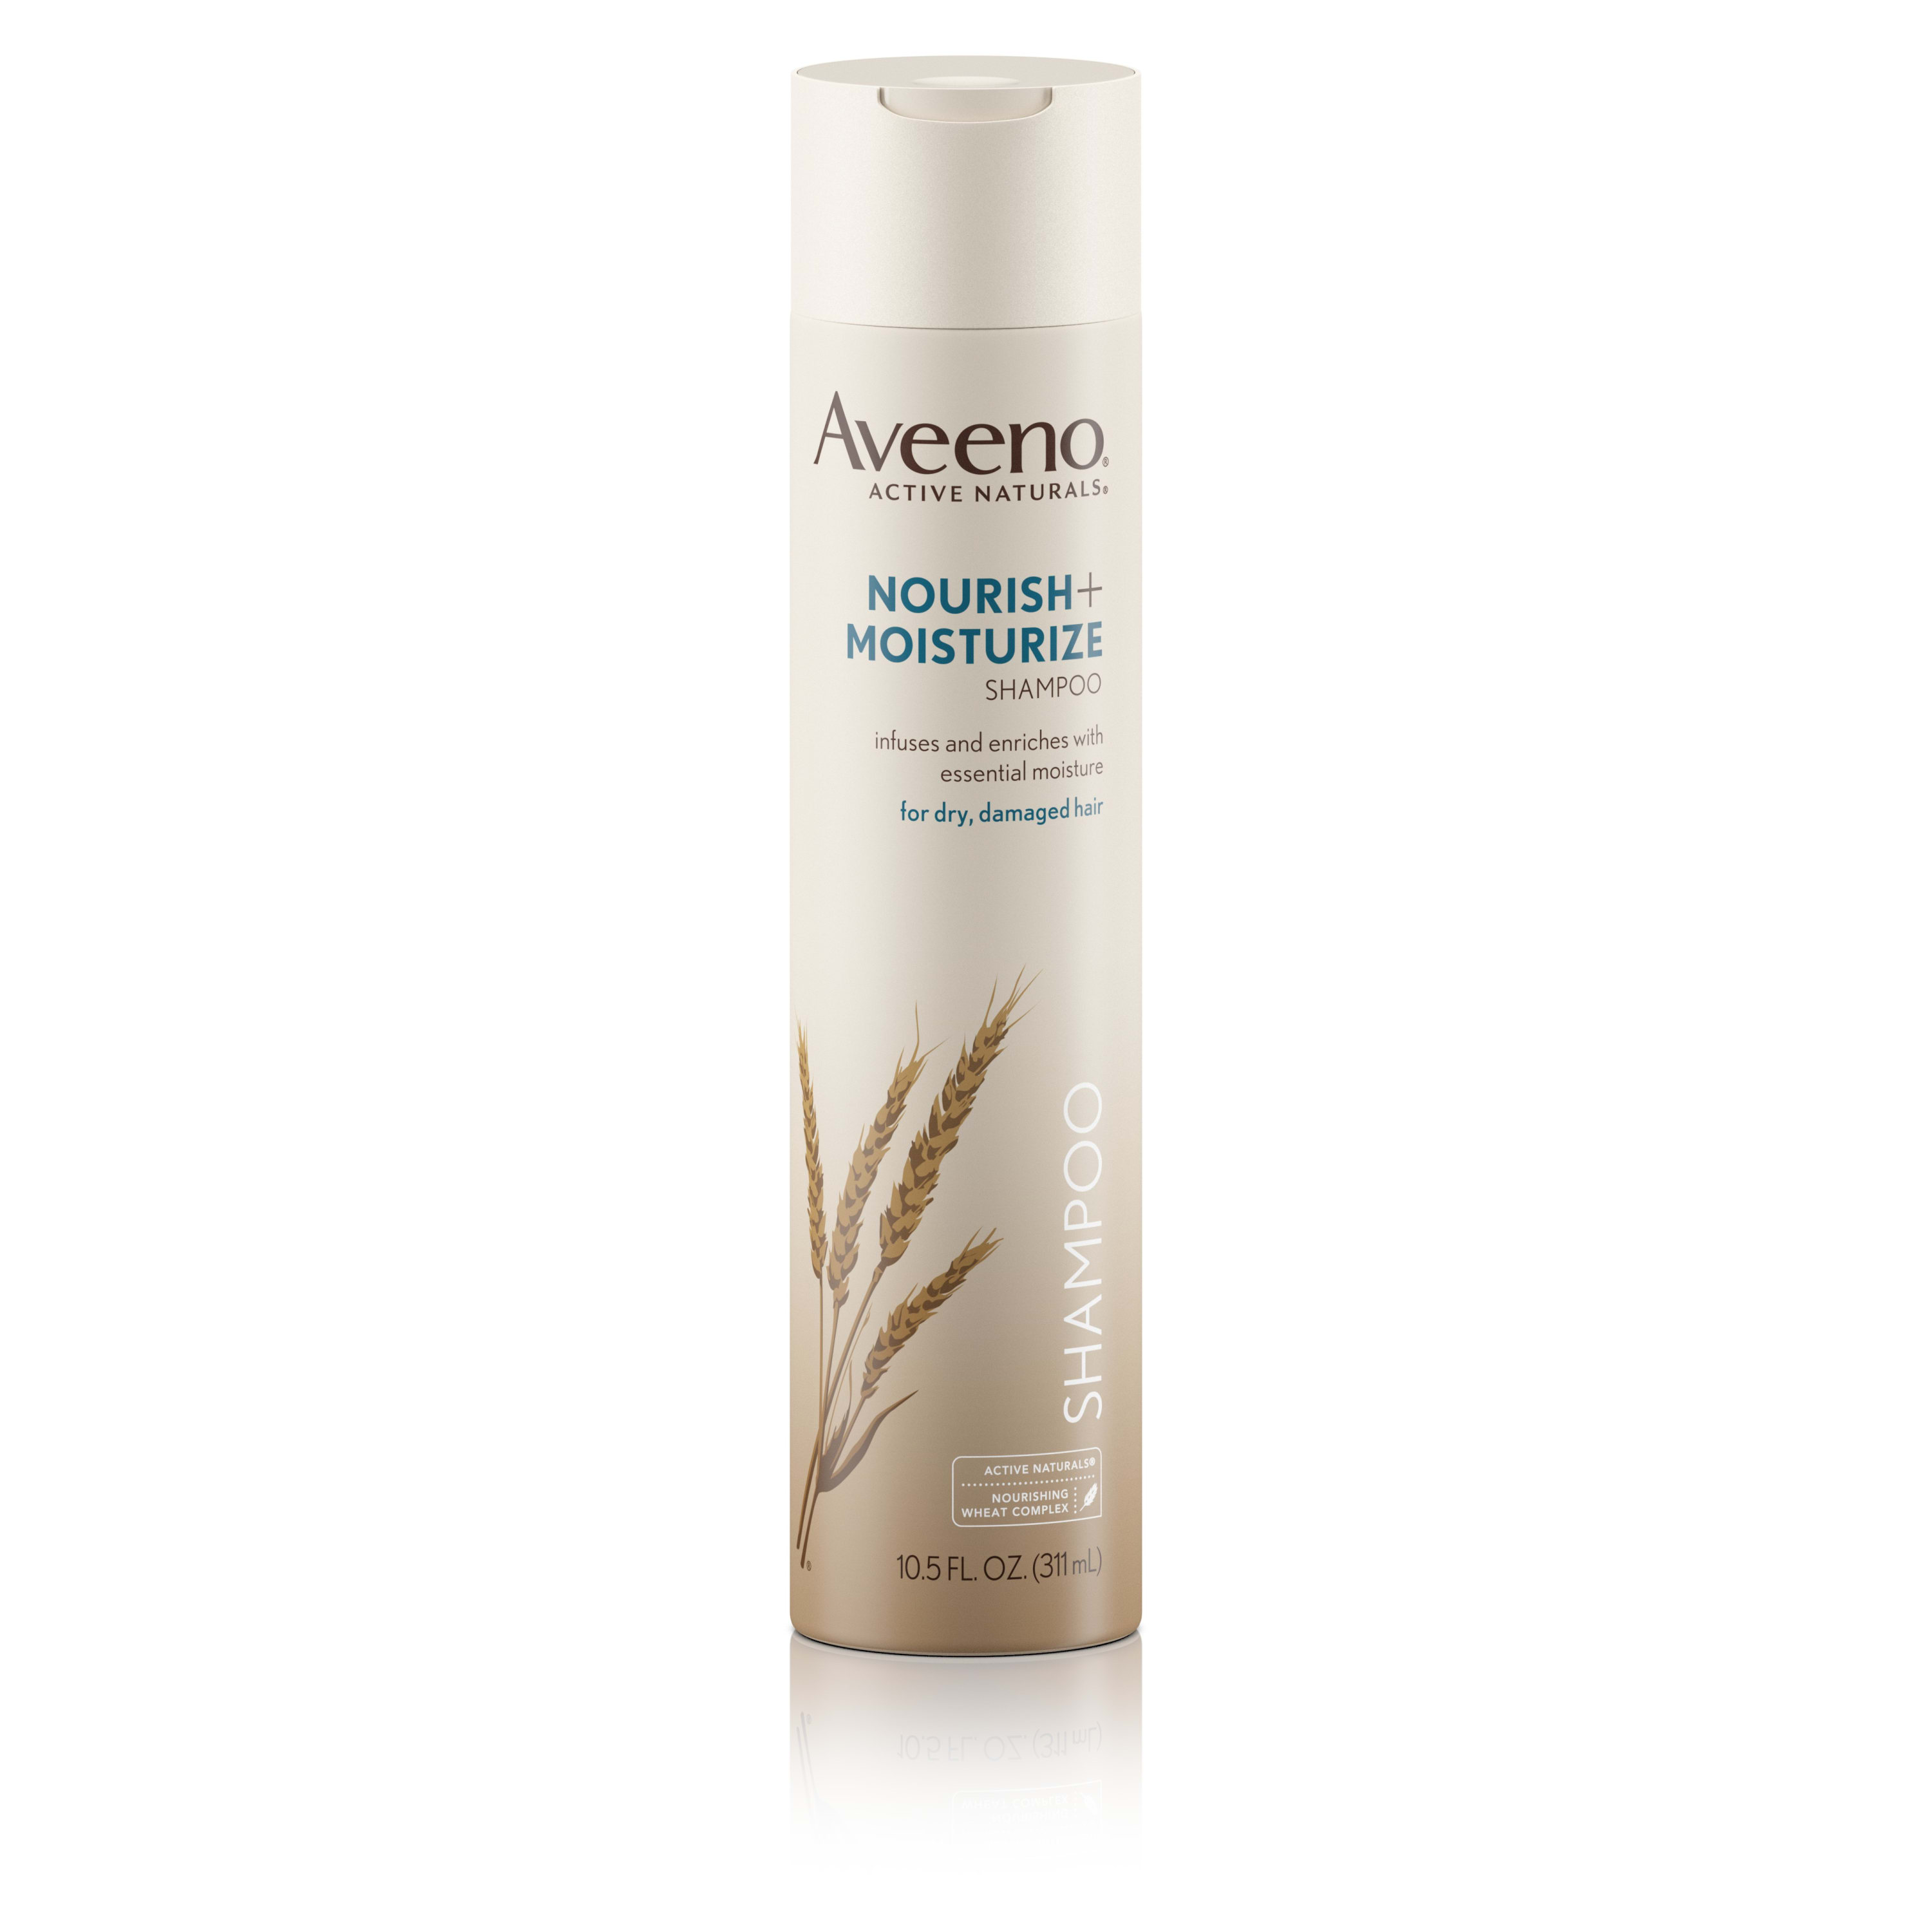 Aveeno Nourish+ Moisturize Gentle Hydrating Shampoo, 10.5 fl. oz - image 2 of 9